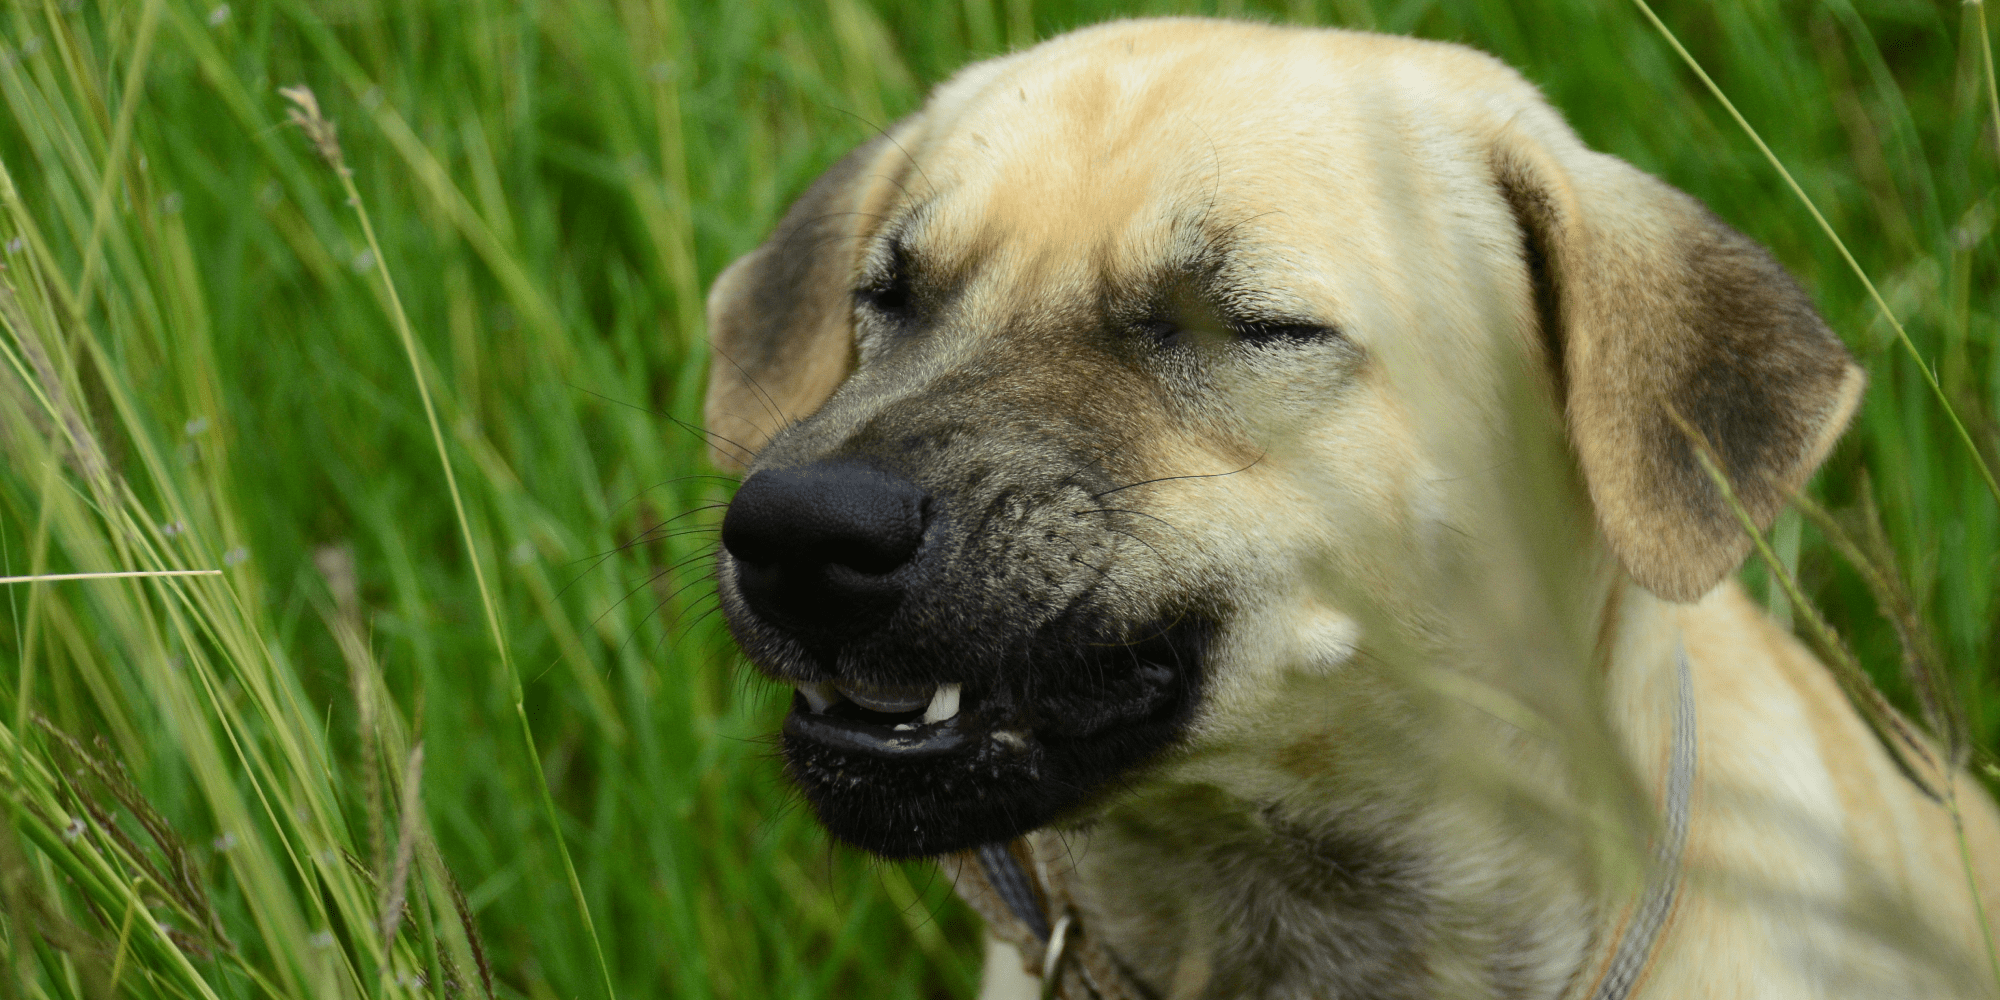 Sneezing in dogs - PDSA